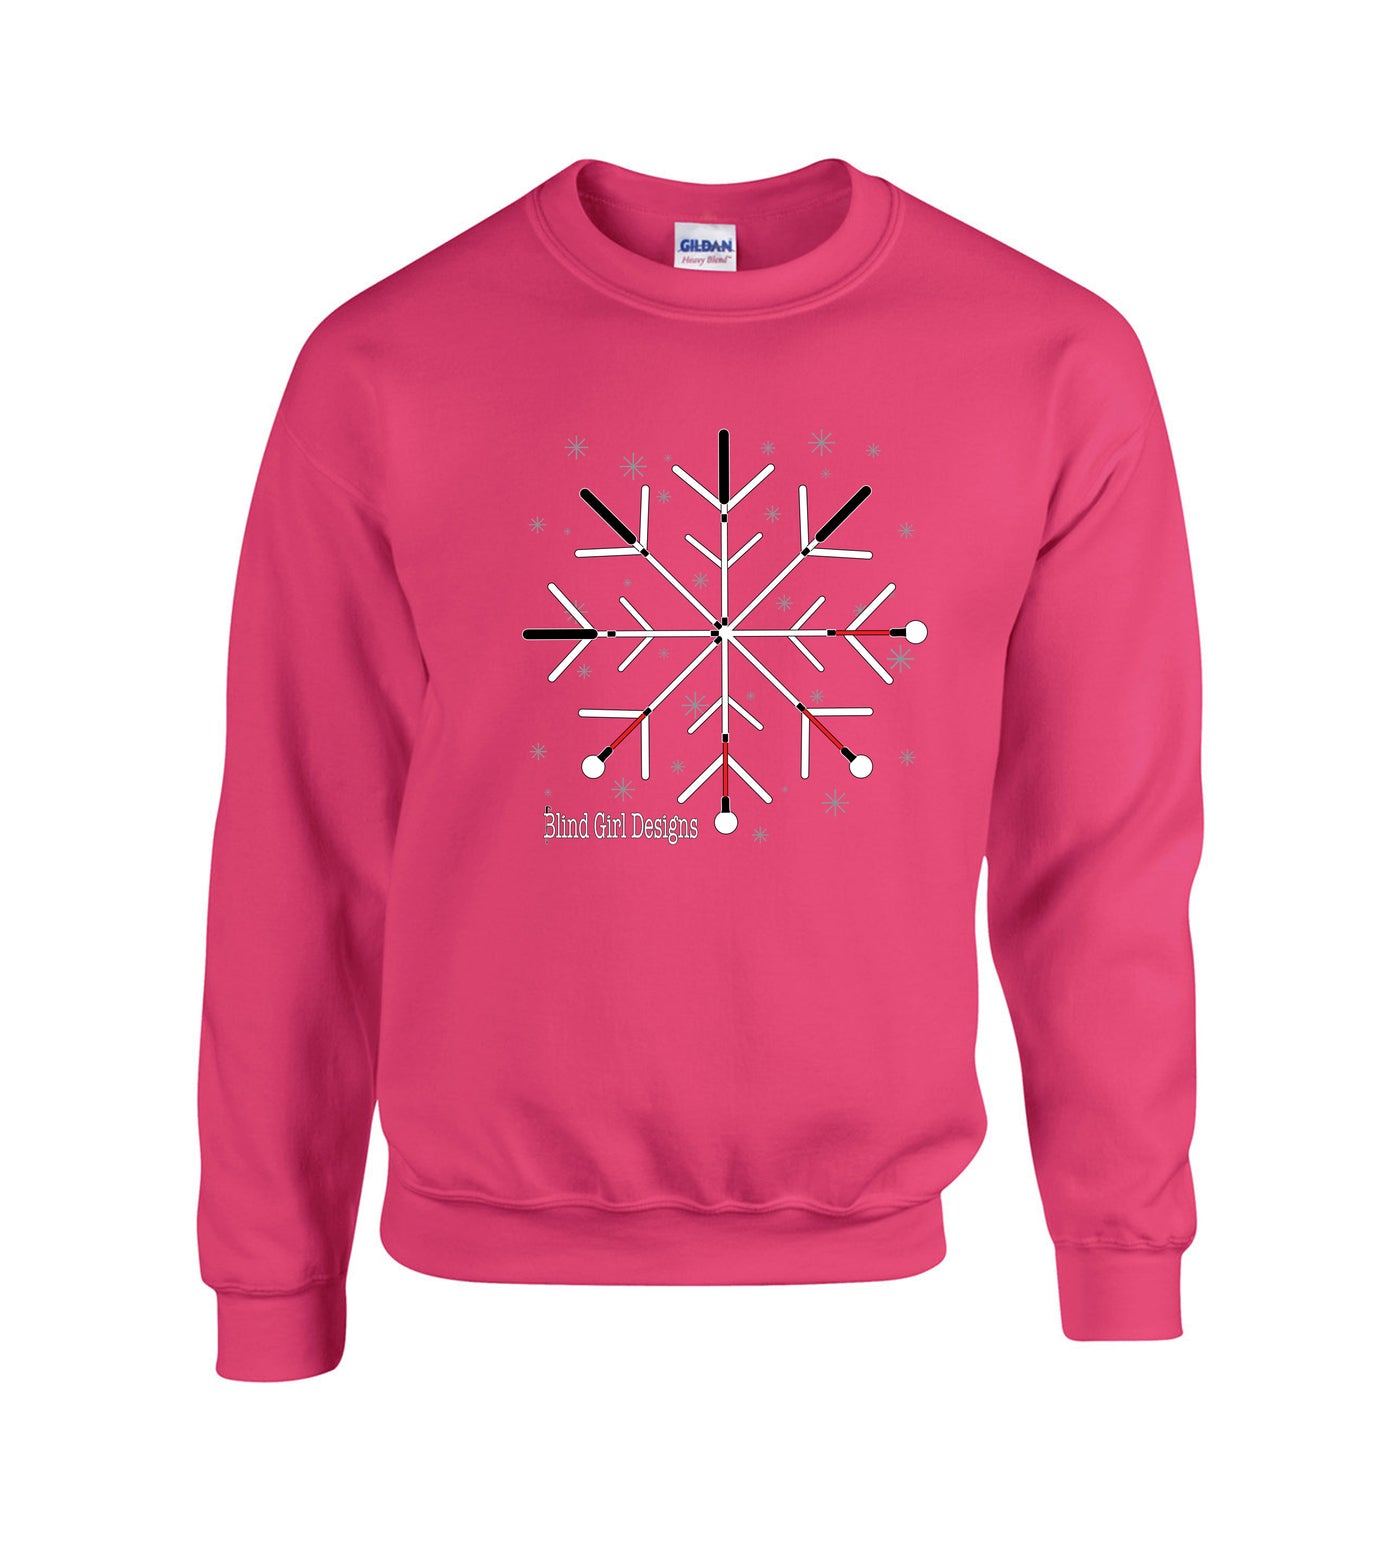 Original Snowflake White Cane Crew Sweatshirt - Pink